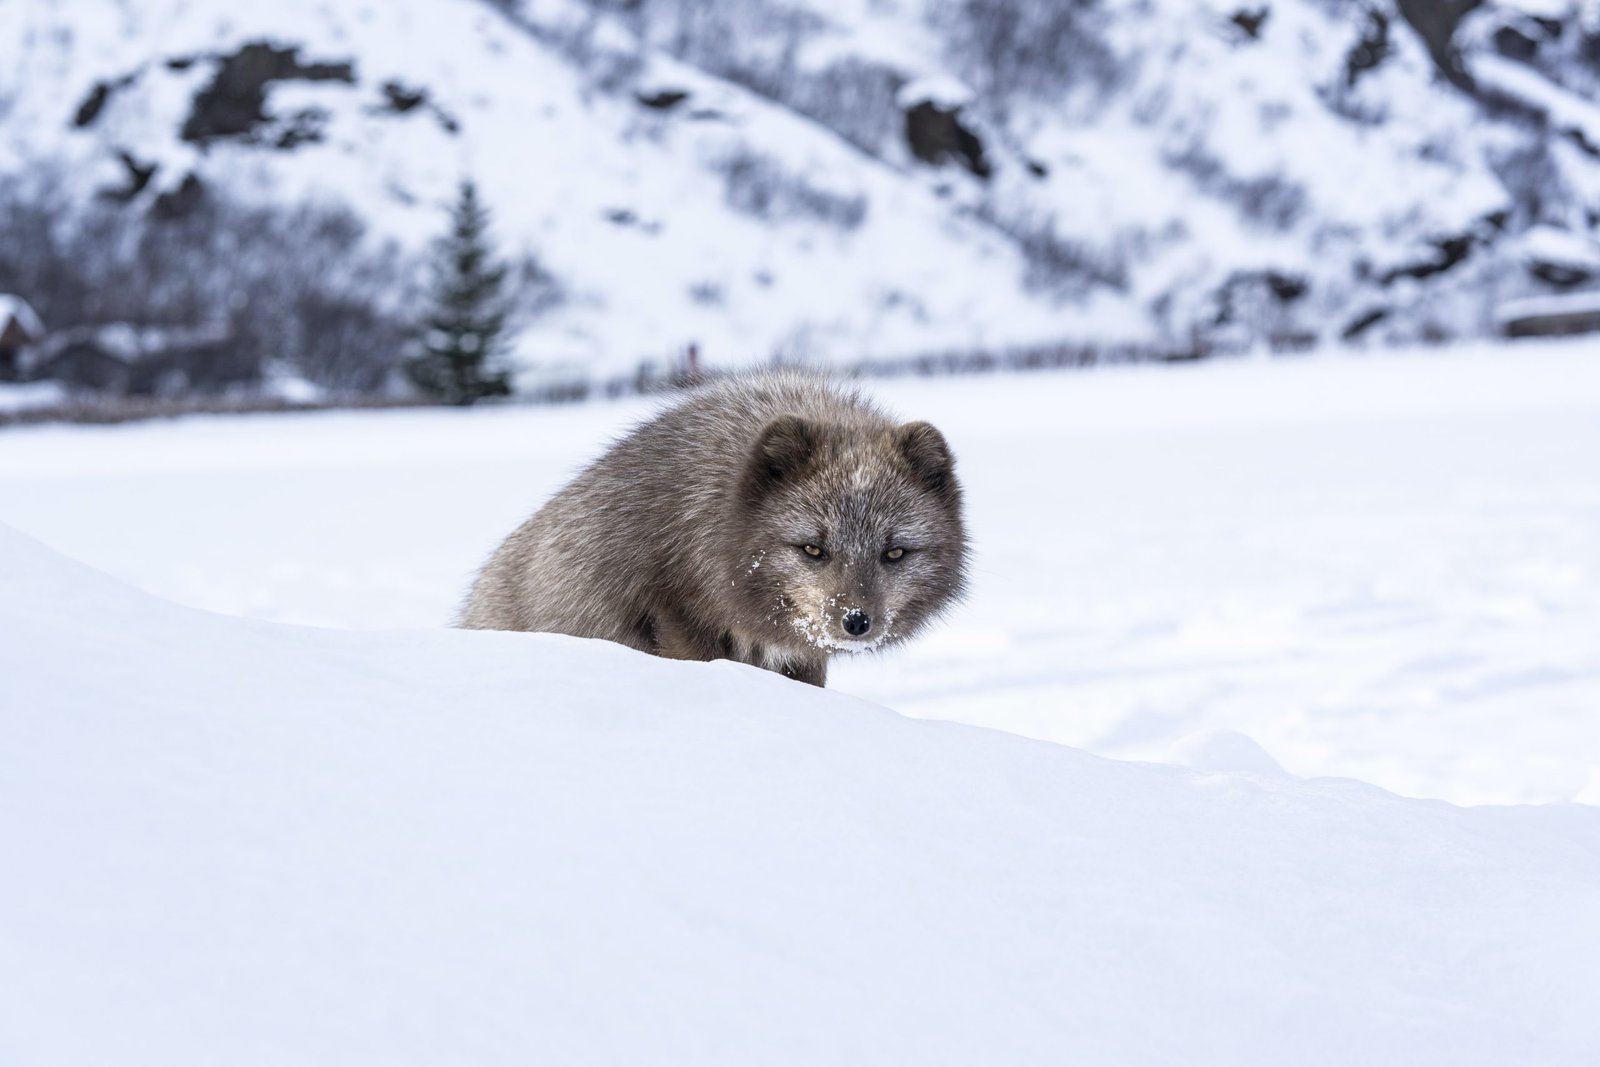 Photograph of gray artic fox in snowy tundra